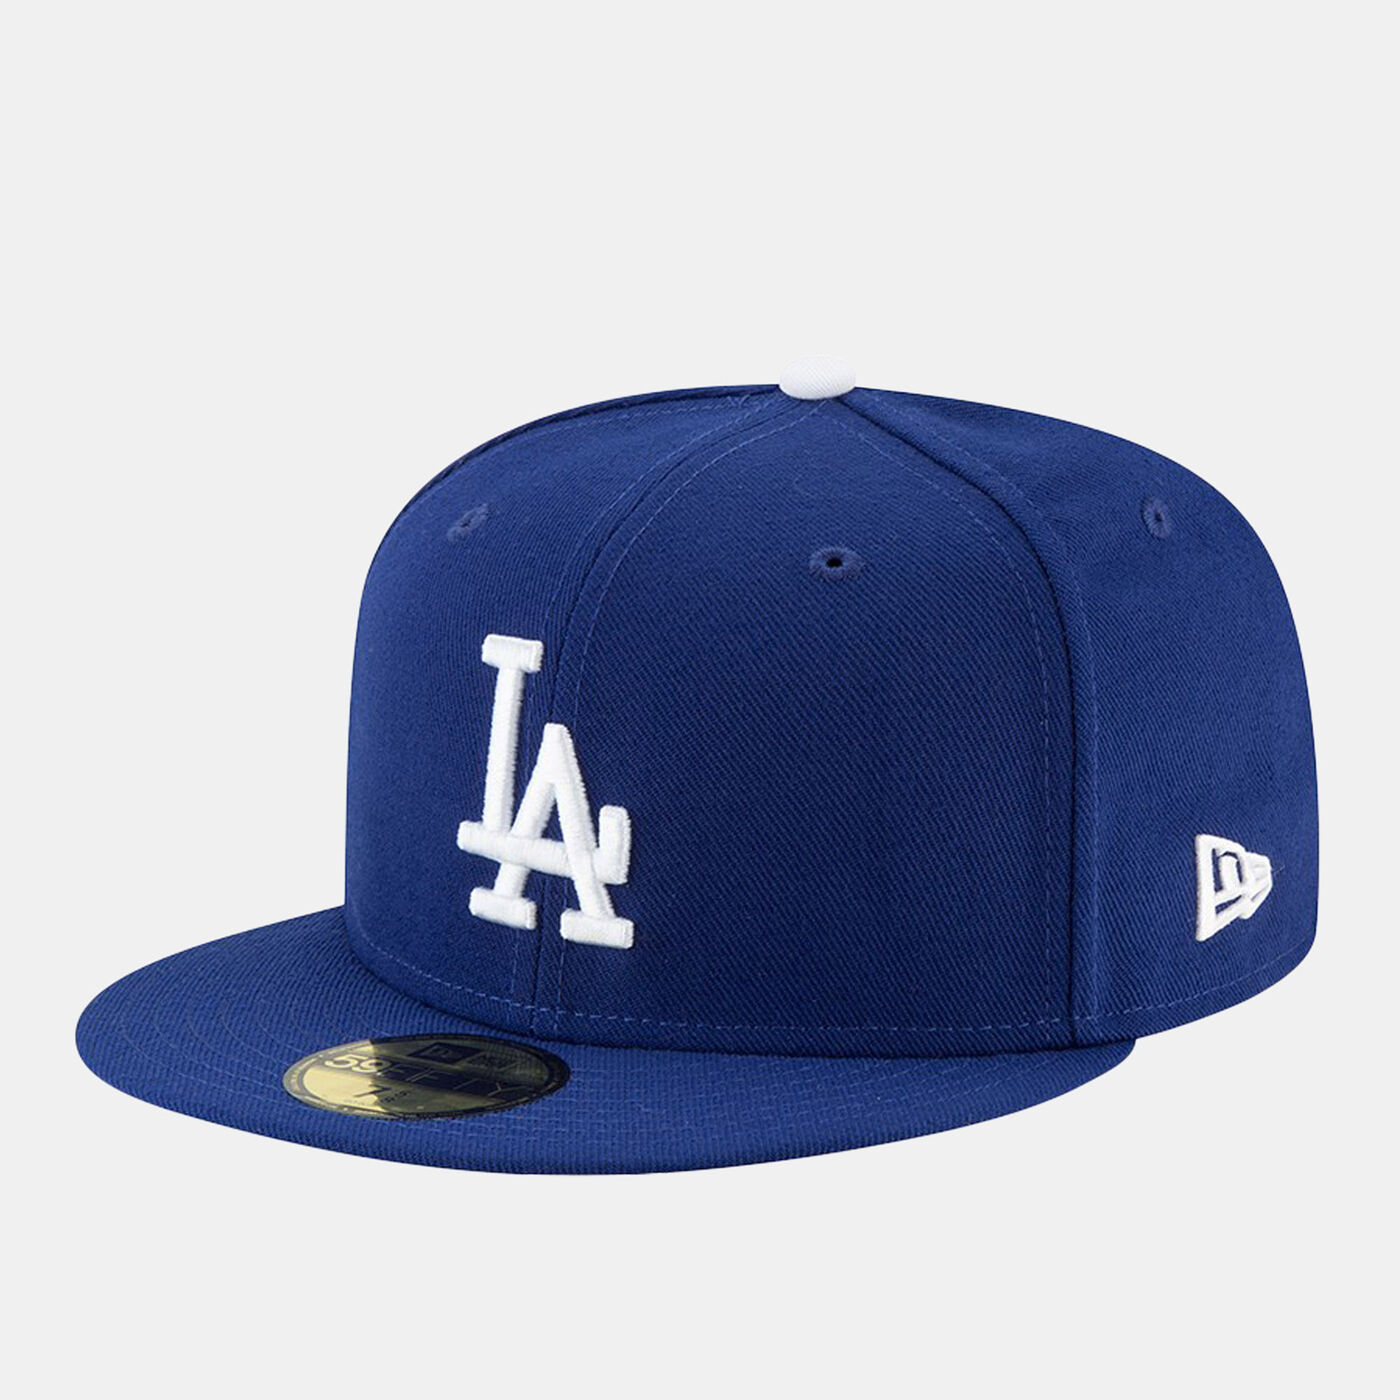 Men's LA Dodgers Authentic On Field Game 59FIFTY Cap